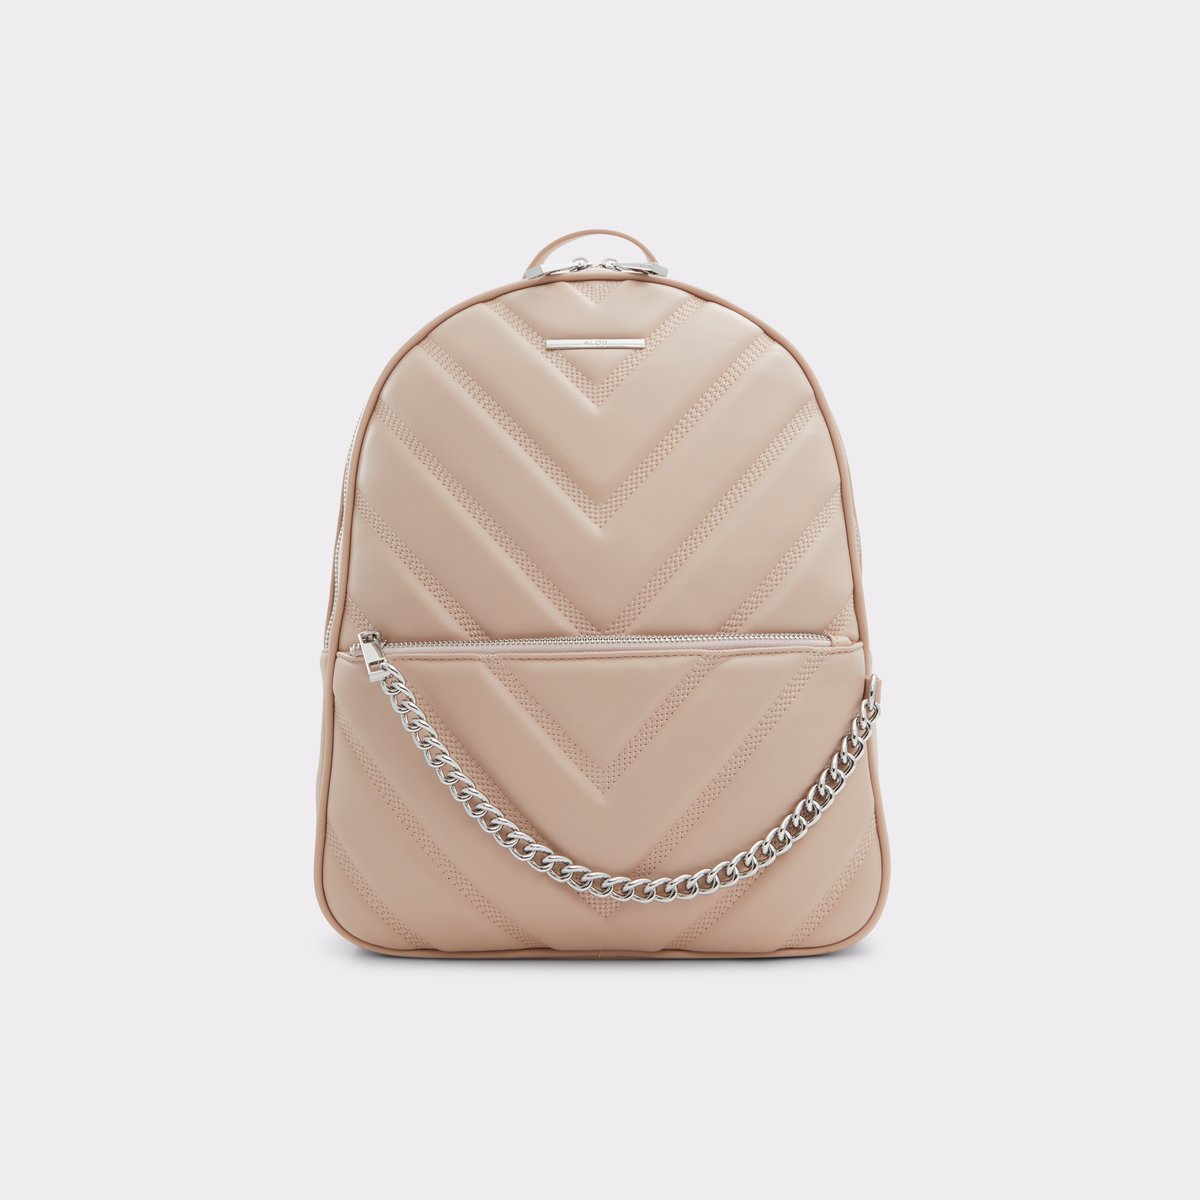 Edoan Bag - Light Pink - ALDO KSA